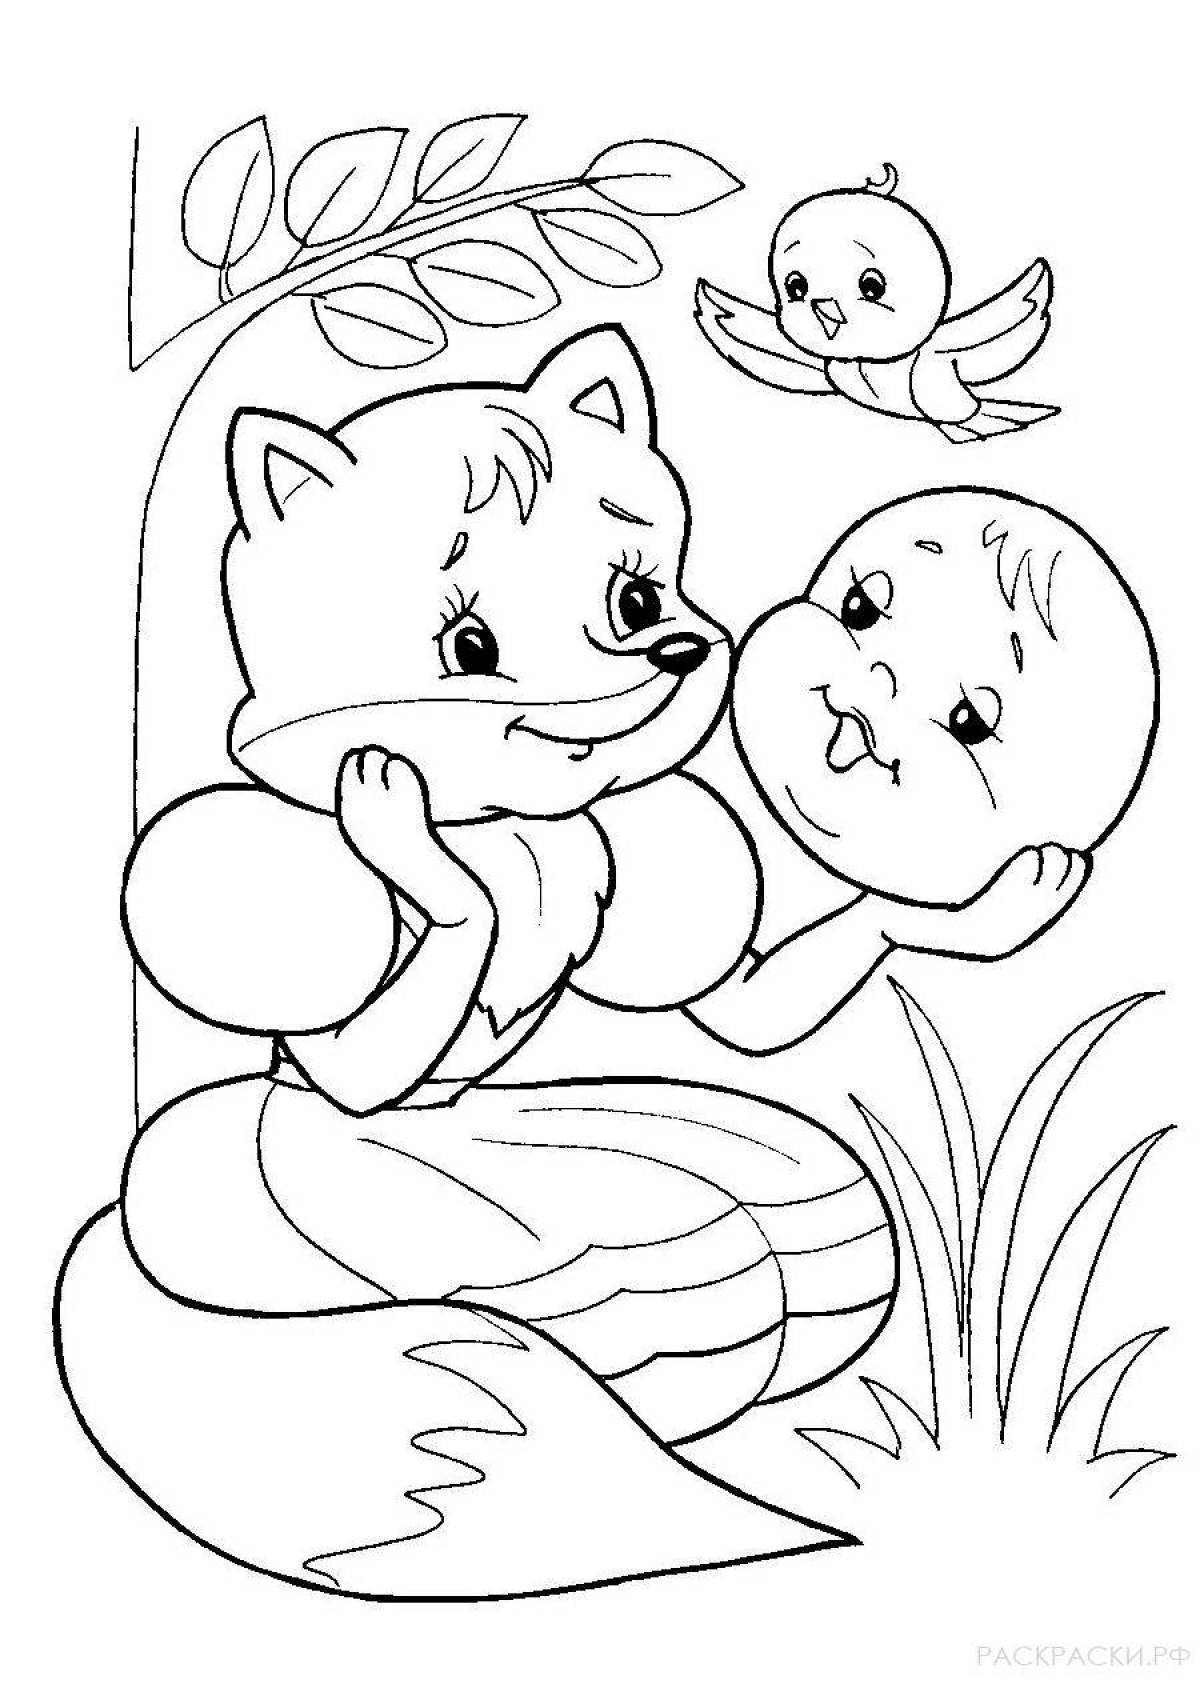 Charming bun coloring for pre-k